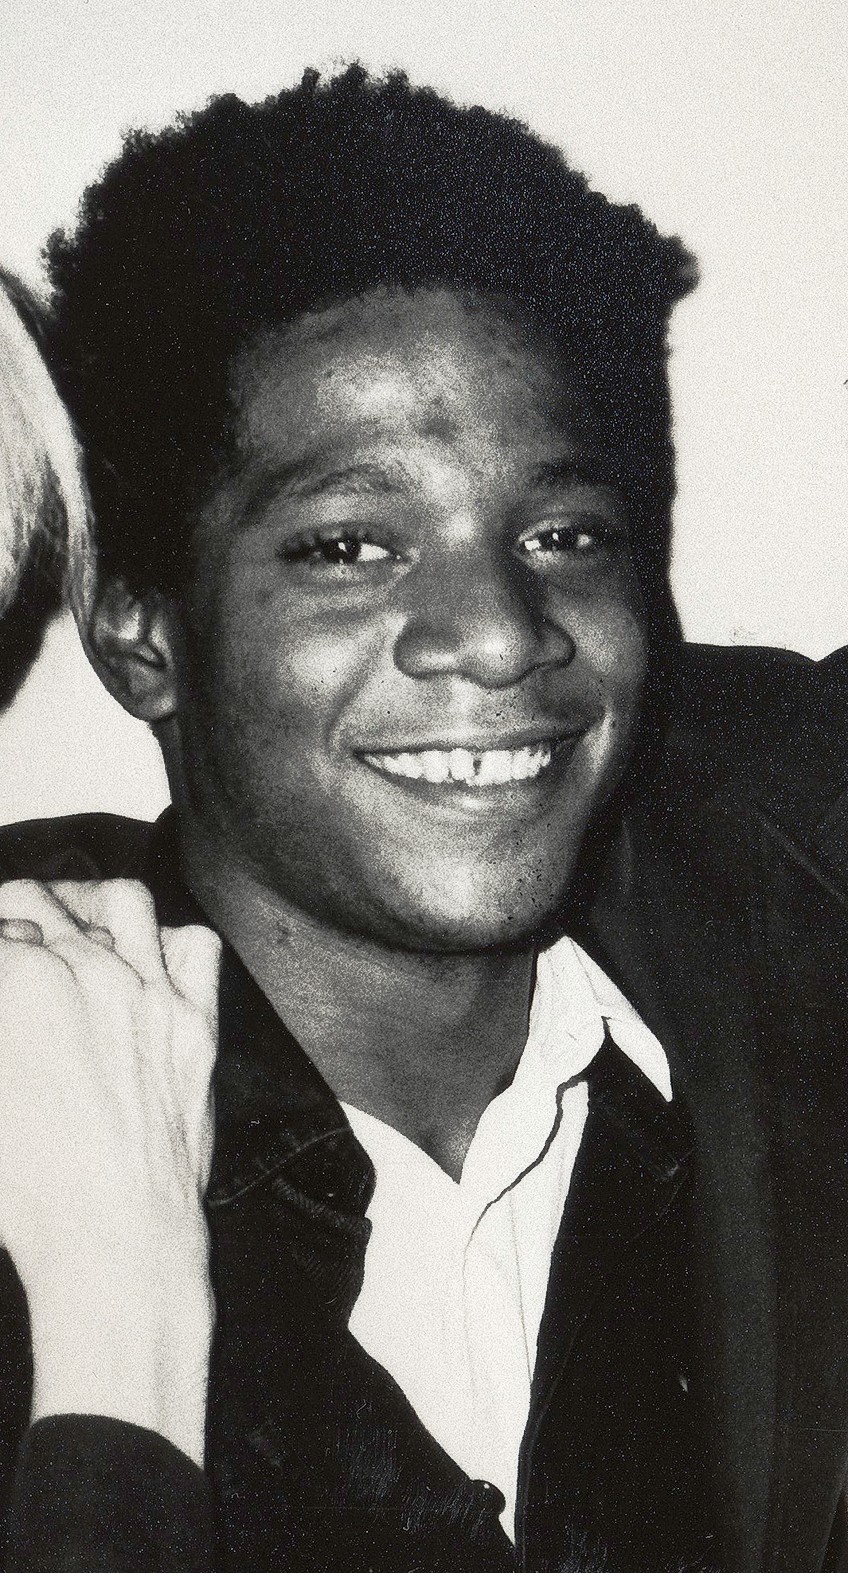 Jean Michel Basquiat Biography